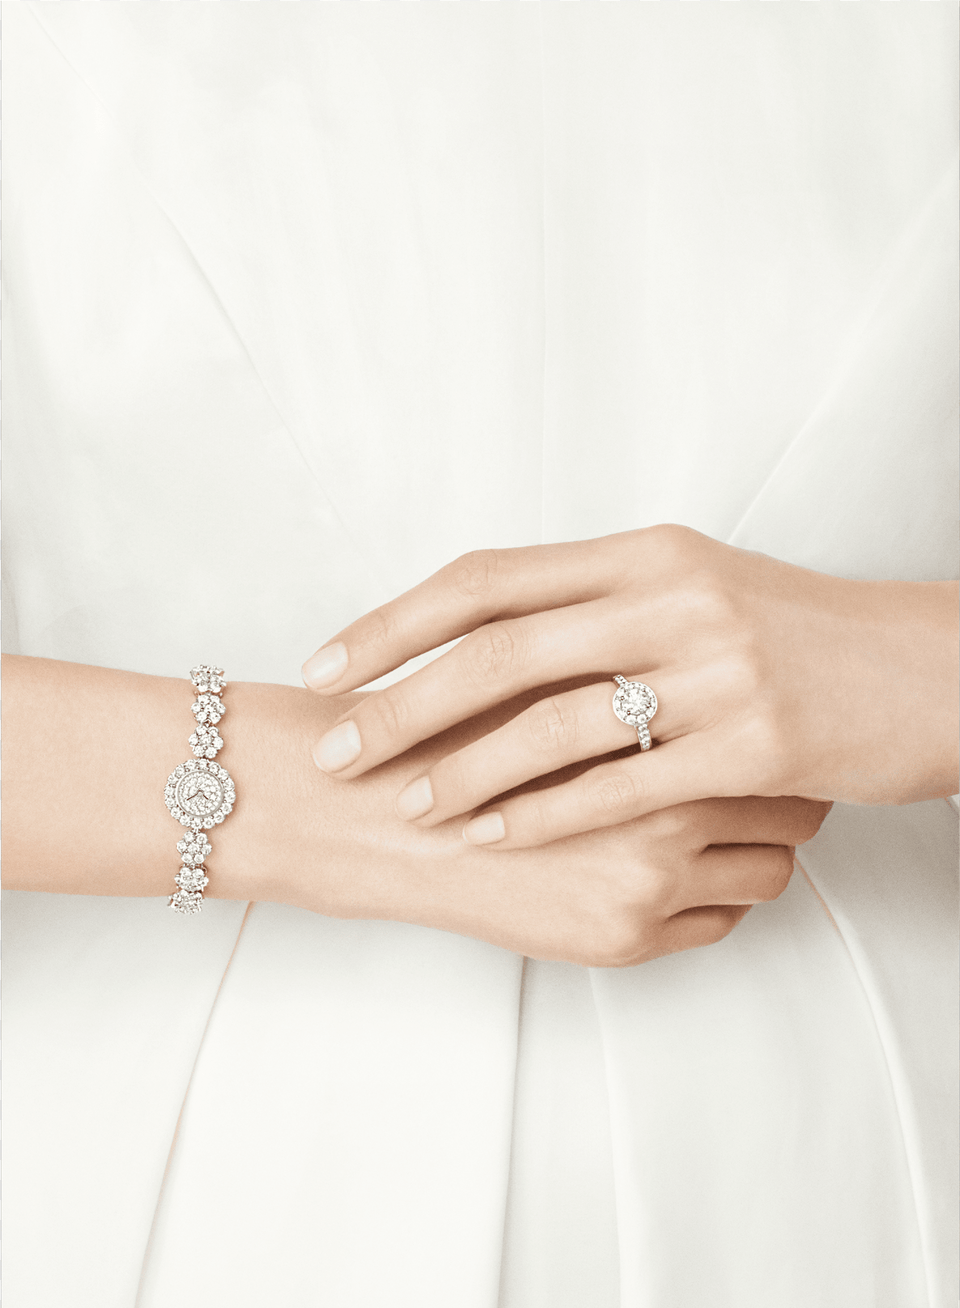 Snowflake Fleurette Watchplatinum Wedding Ring, Hand, Body Part, Person, Finger Png Image